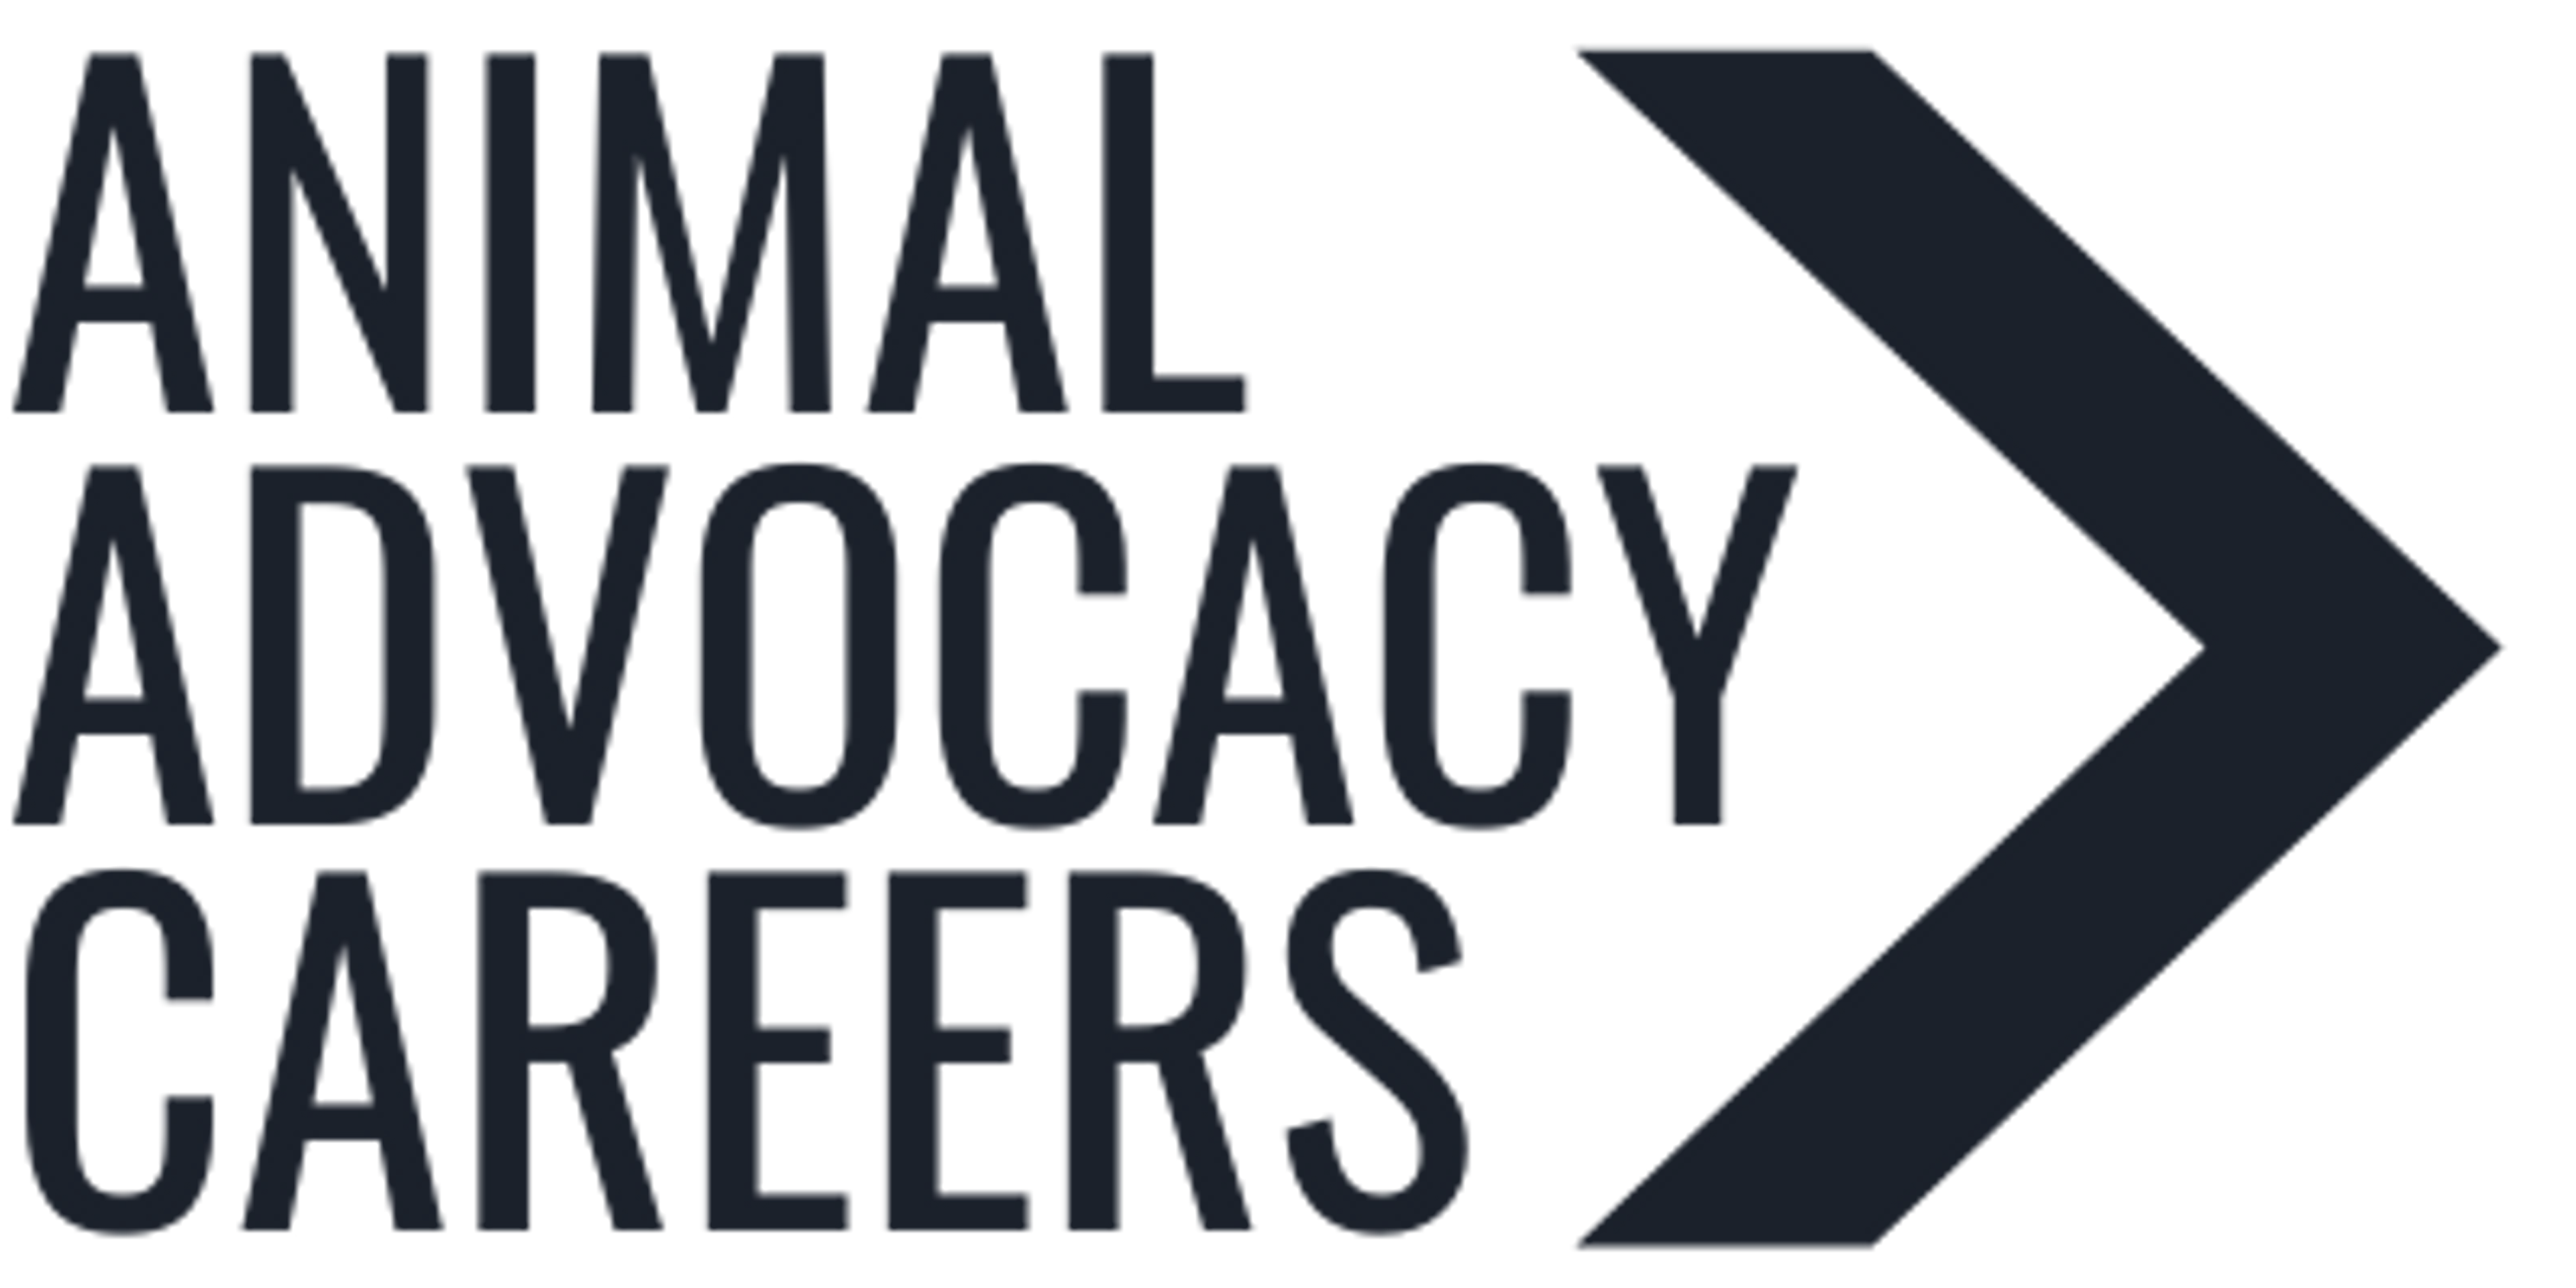 Animal Advocacy Careers